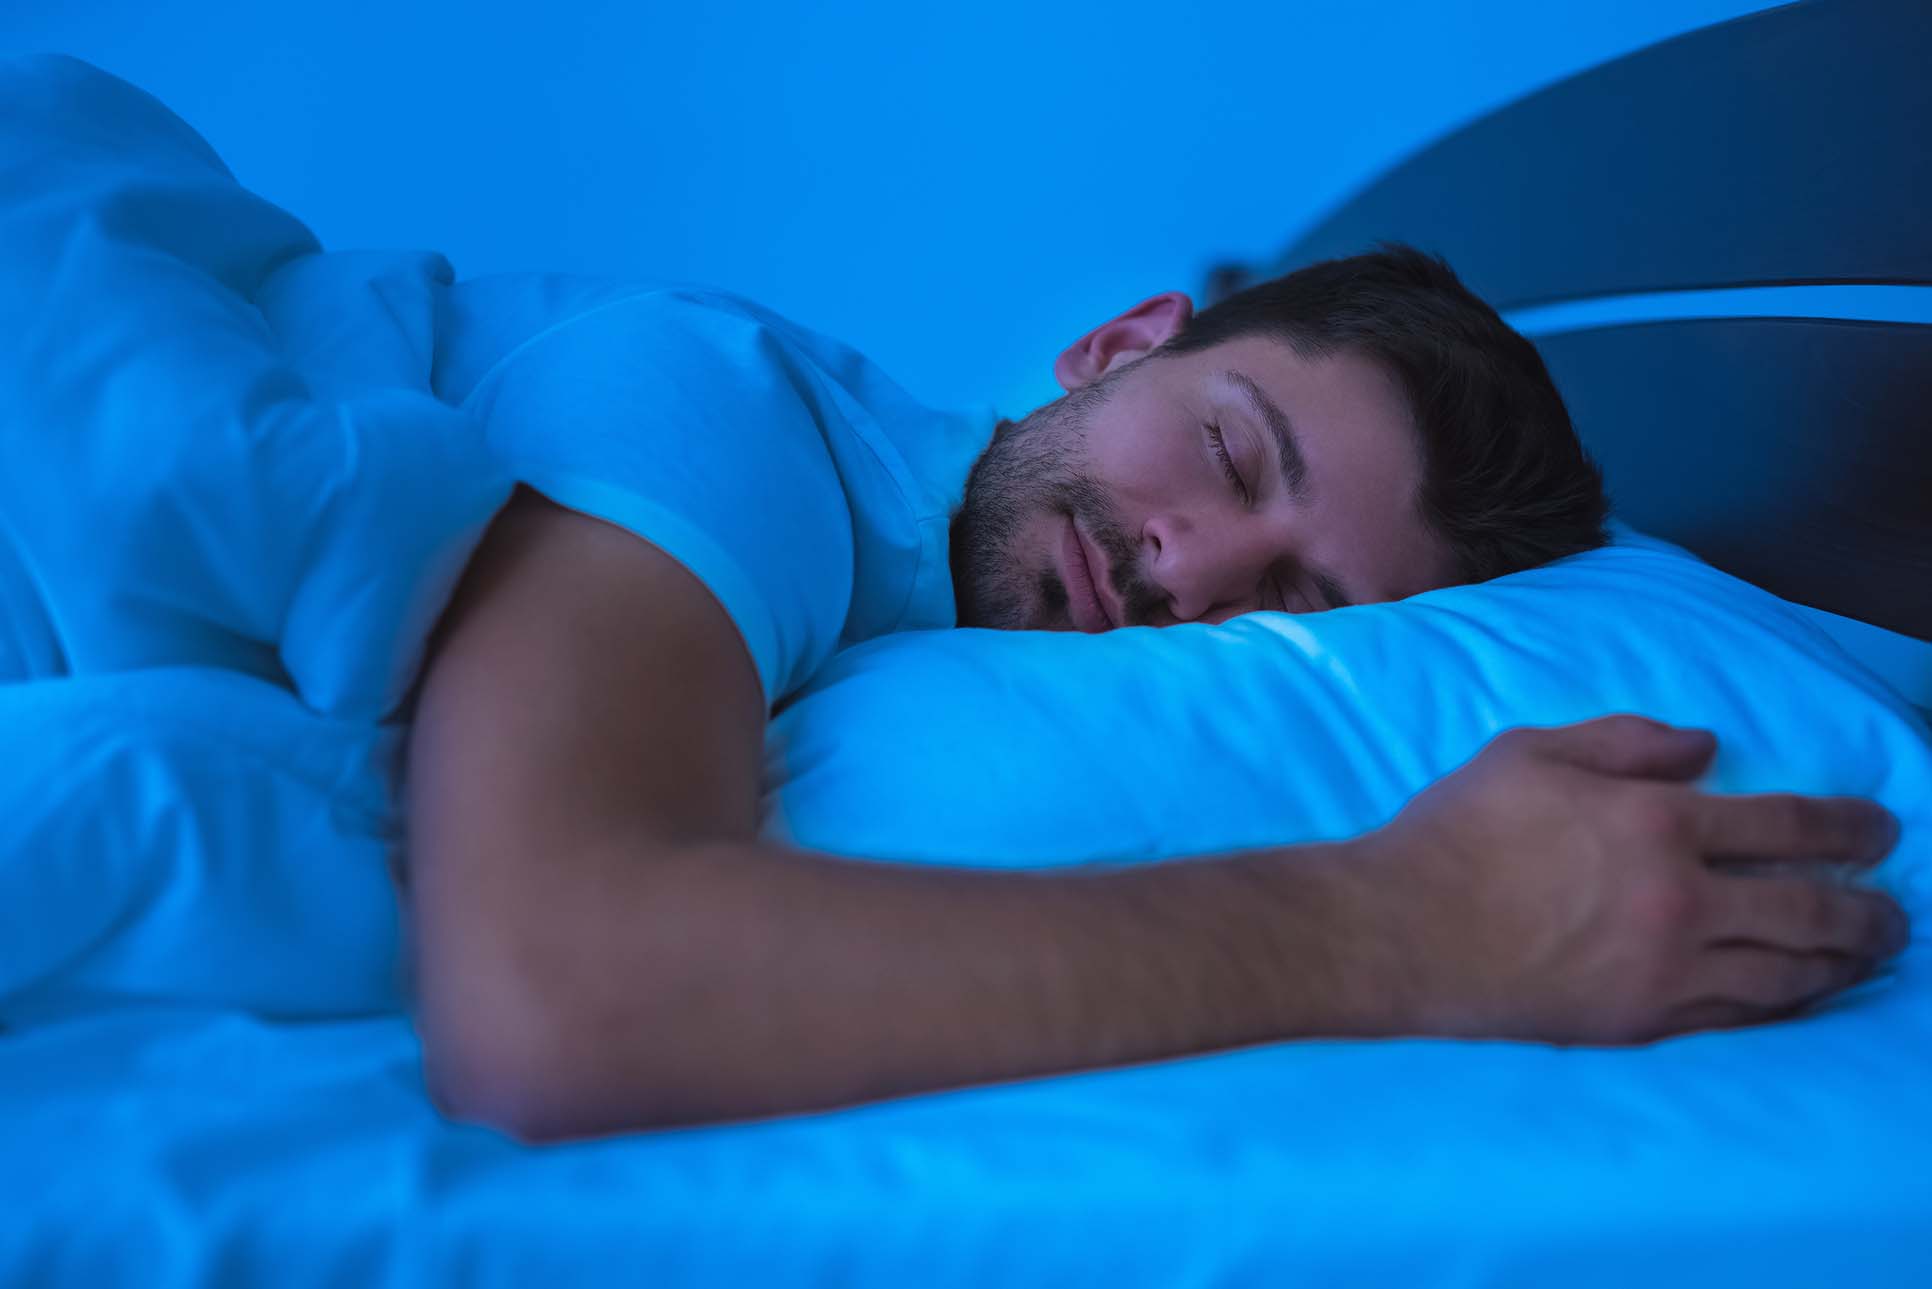 HOW TO GET MORE DEEP SLEEP